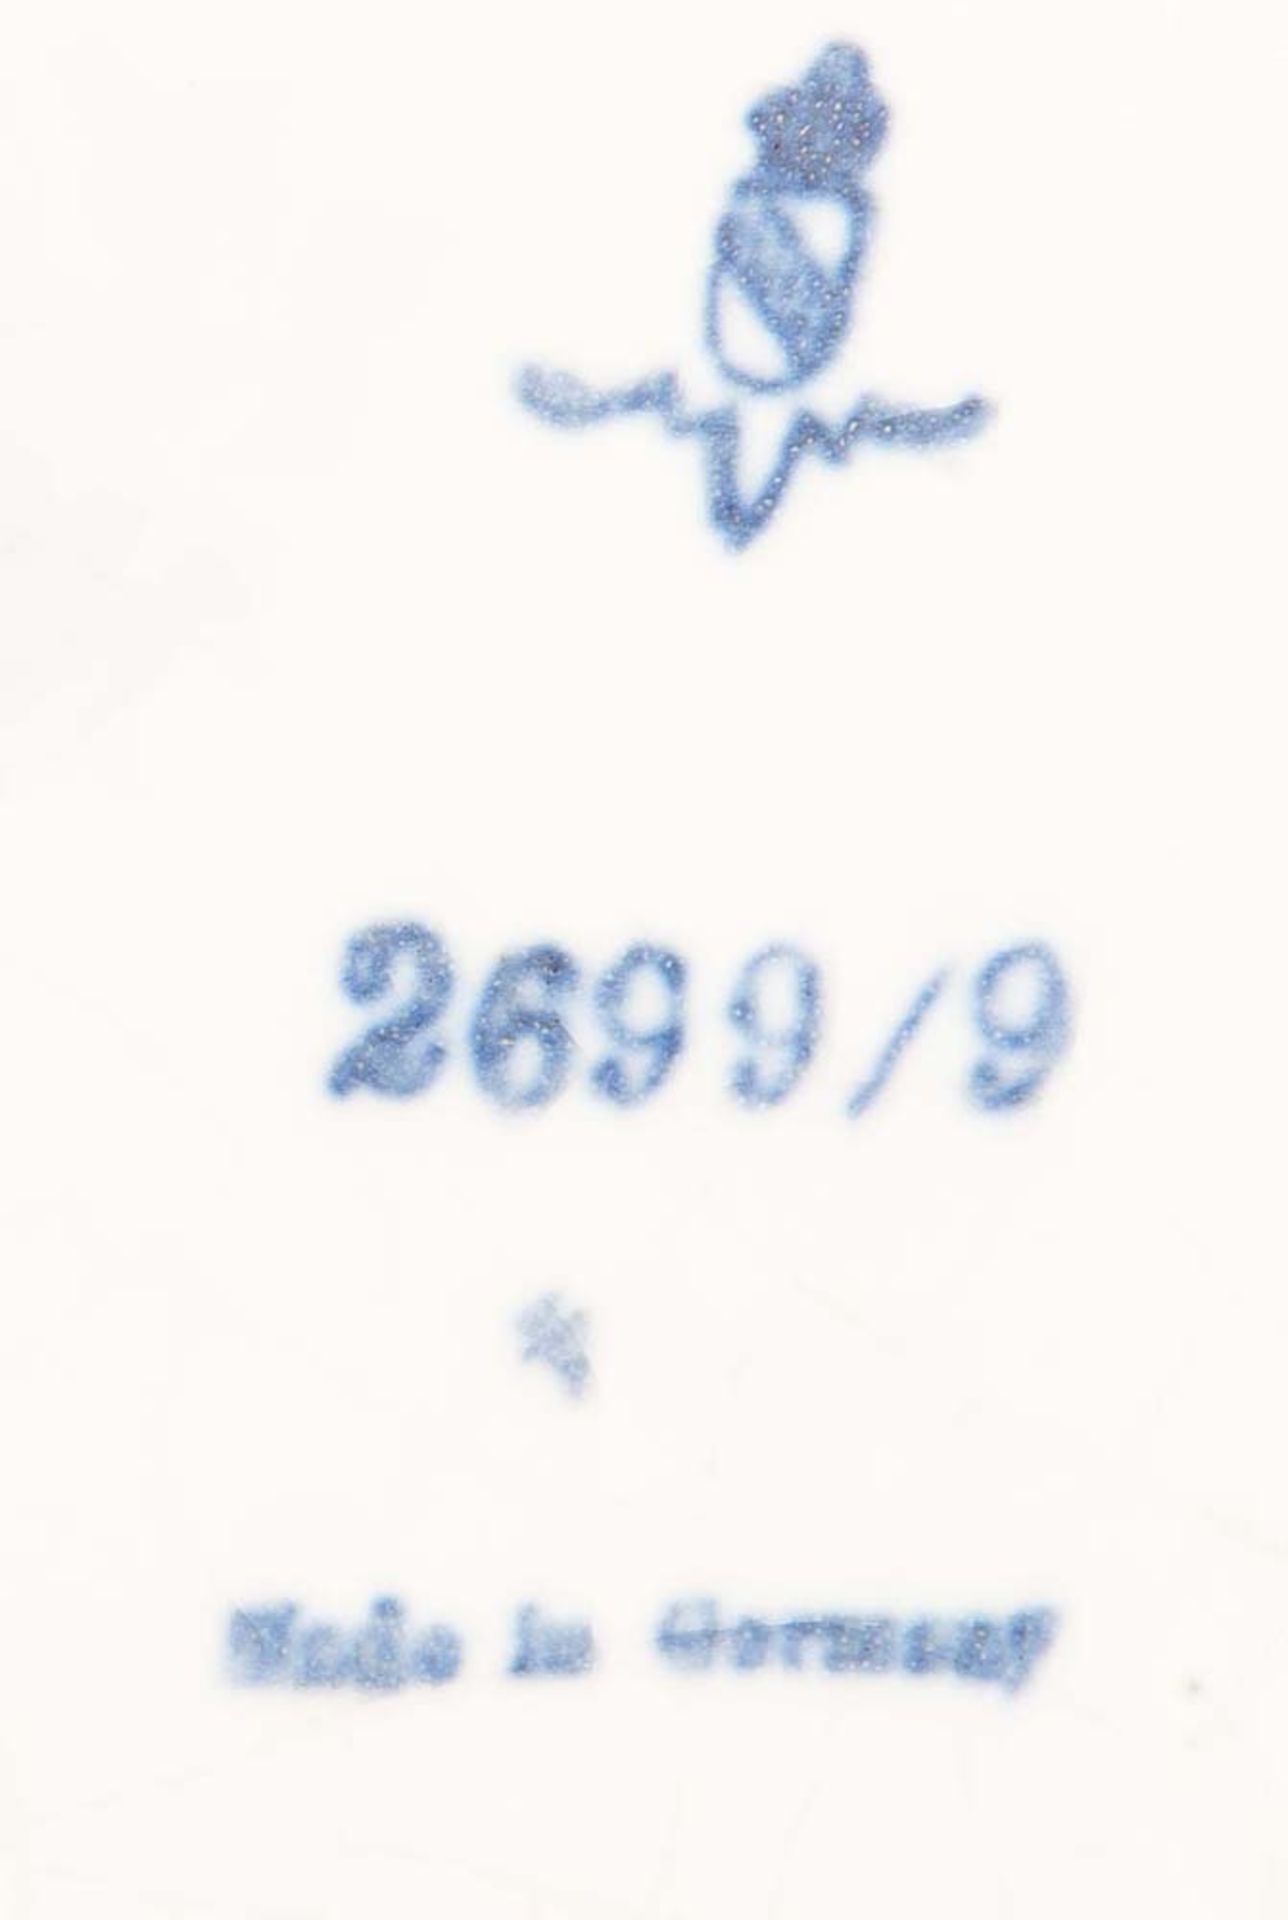 Bowlengefäß. Karlsruher Majolika 20. Jh. Irdengut, bunt bemalt, glasiert, Nr. 2699/9, H=29 cm, D= - Bild 2 aus 3